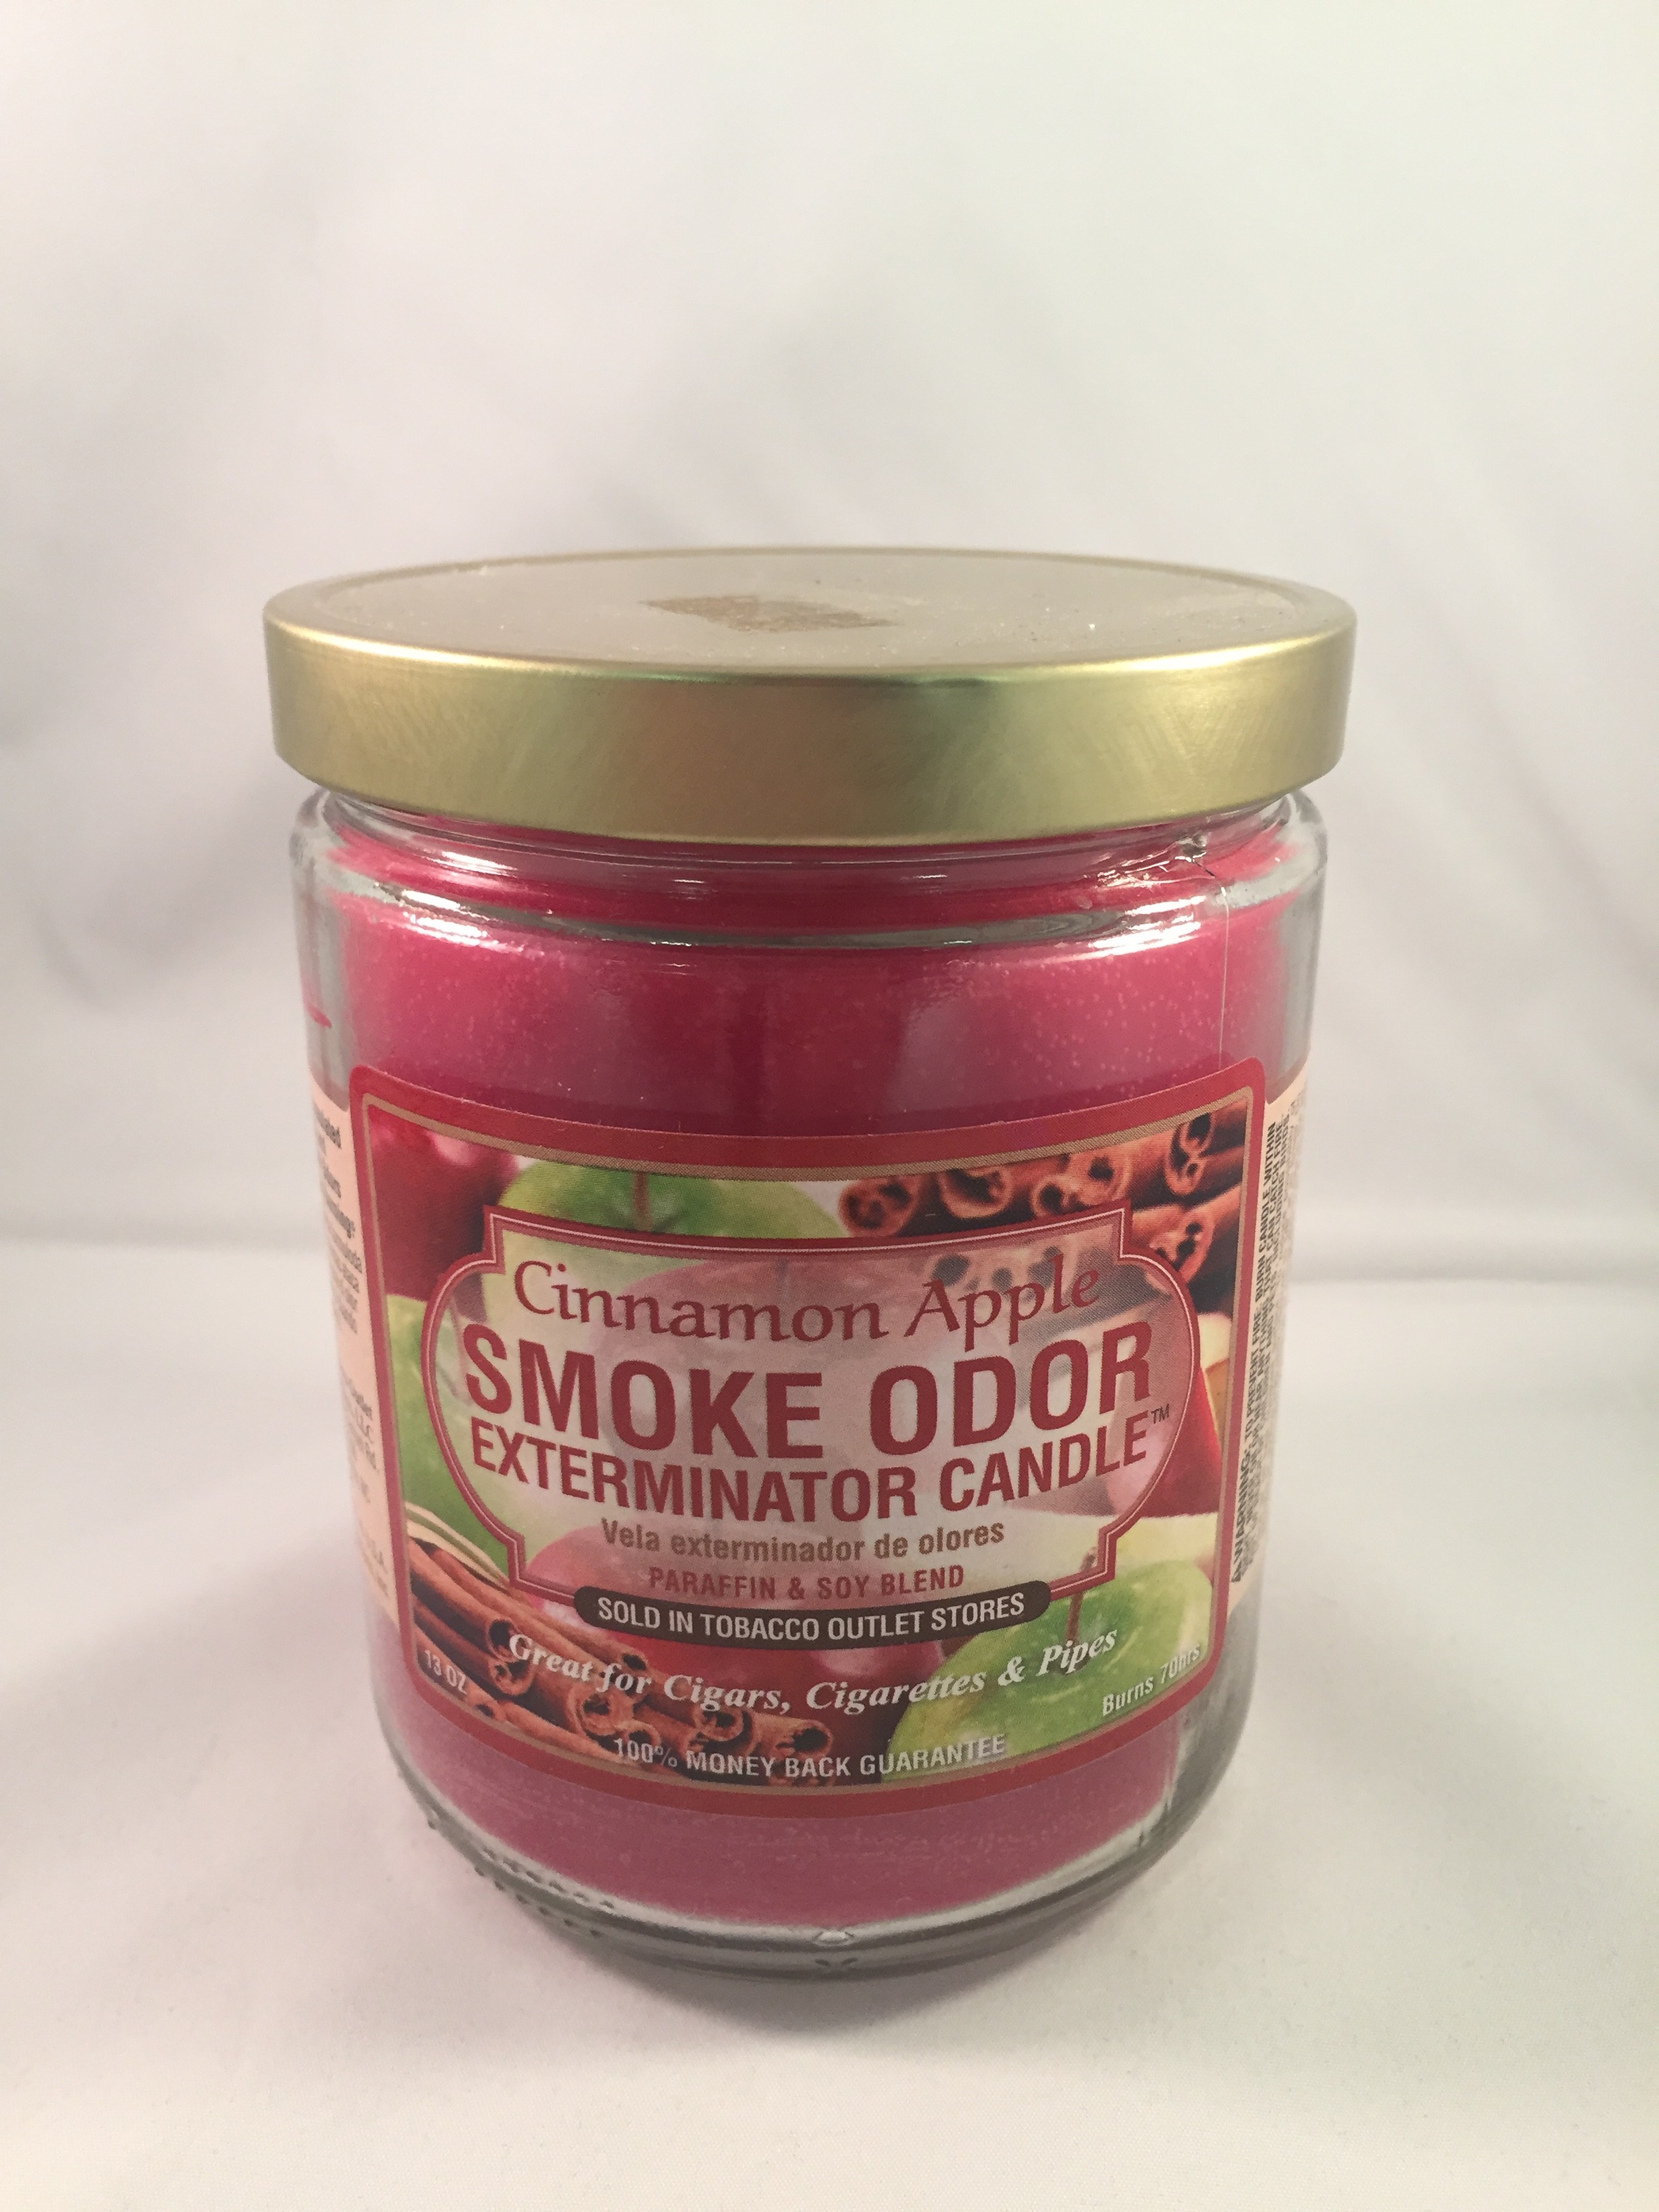 Smoke Odor Exterminator Candle - Cinnamon Apple